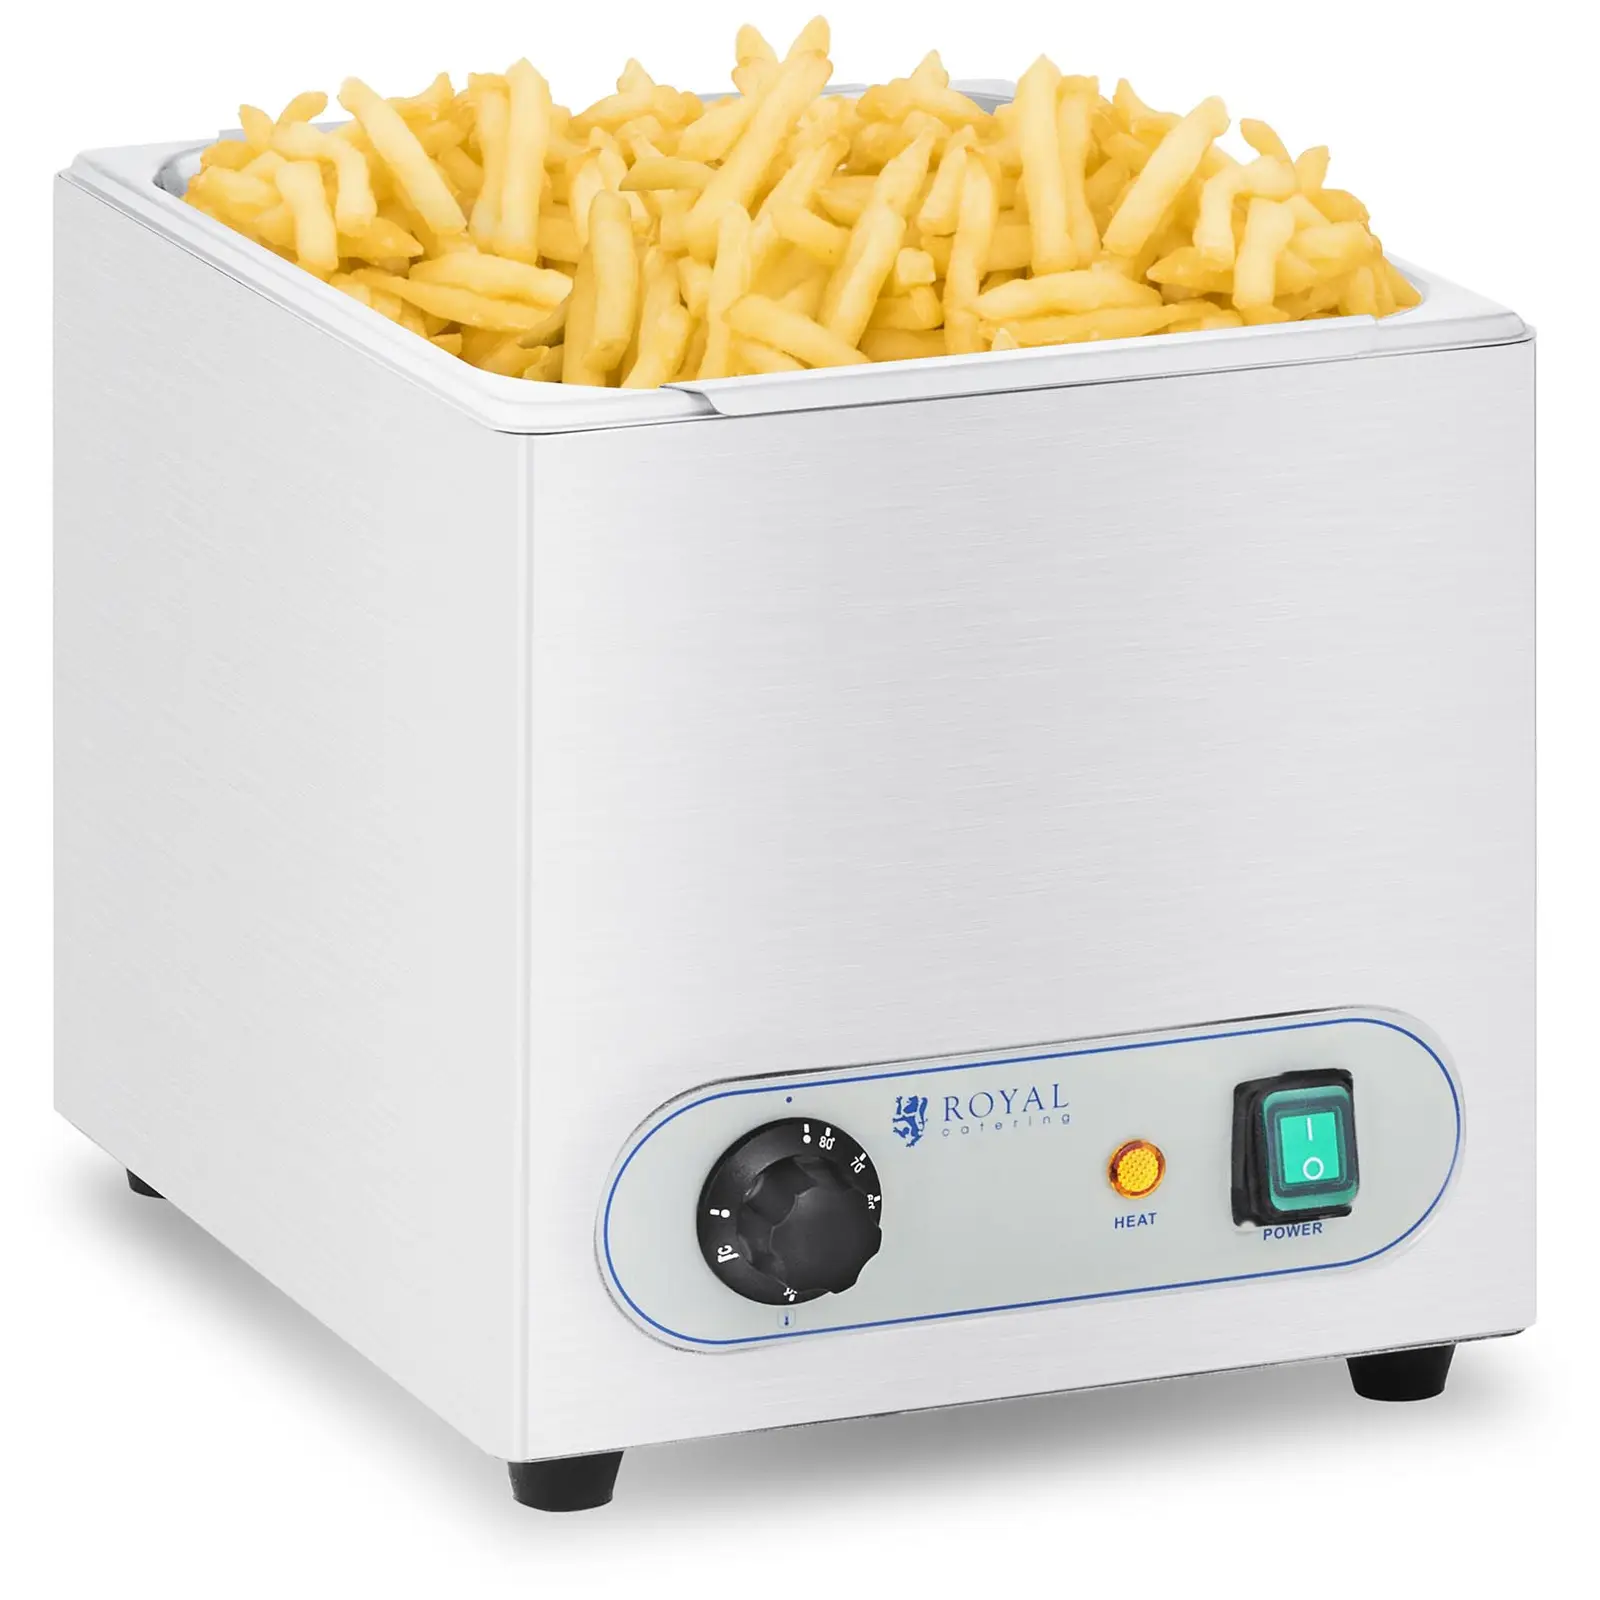 Pommes frites värmare - 350 W